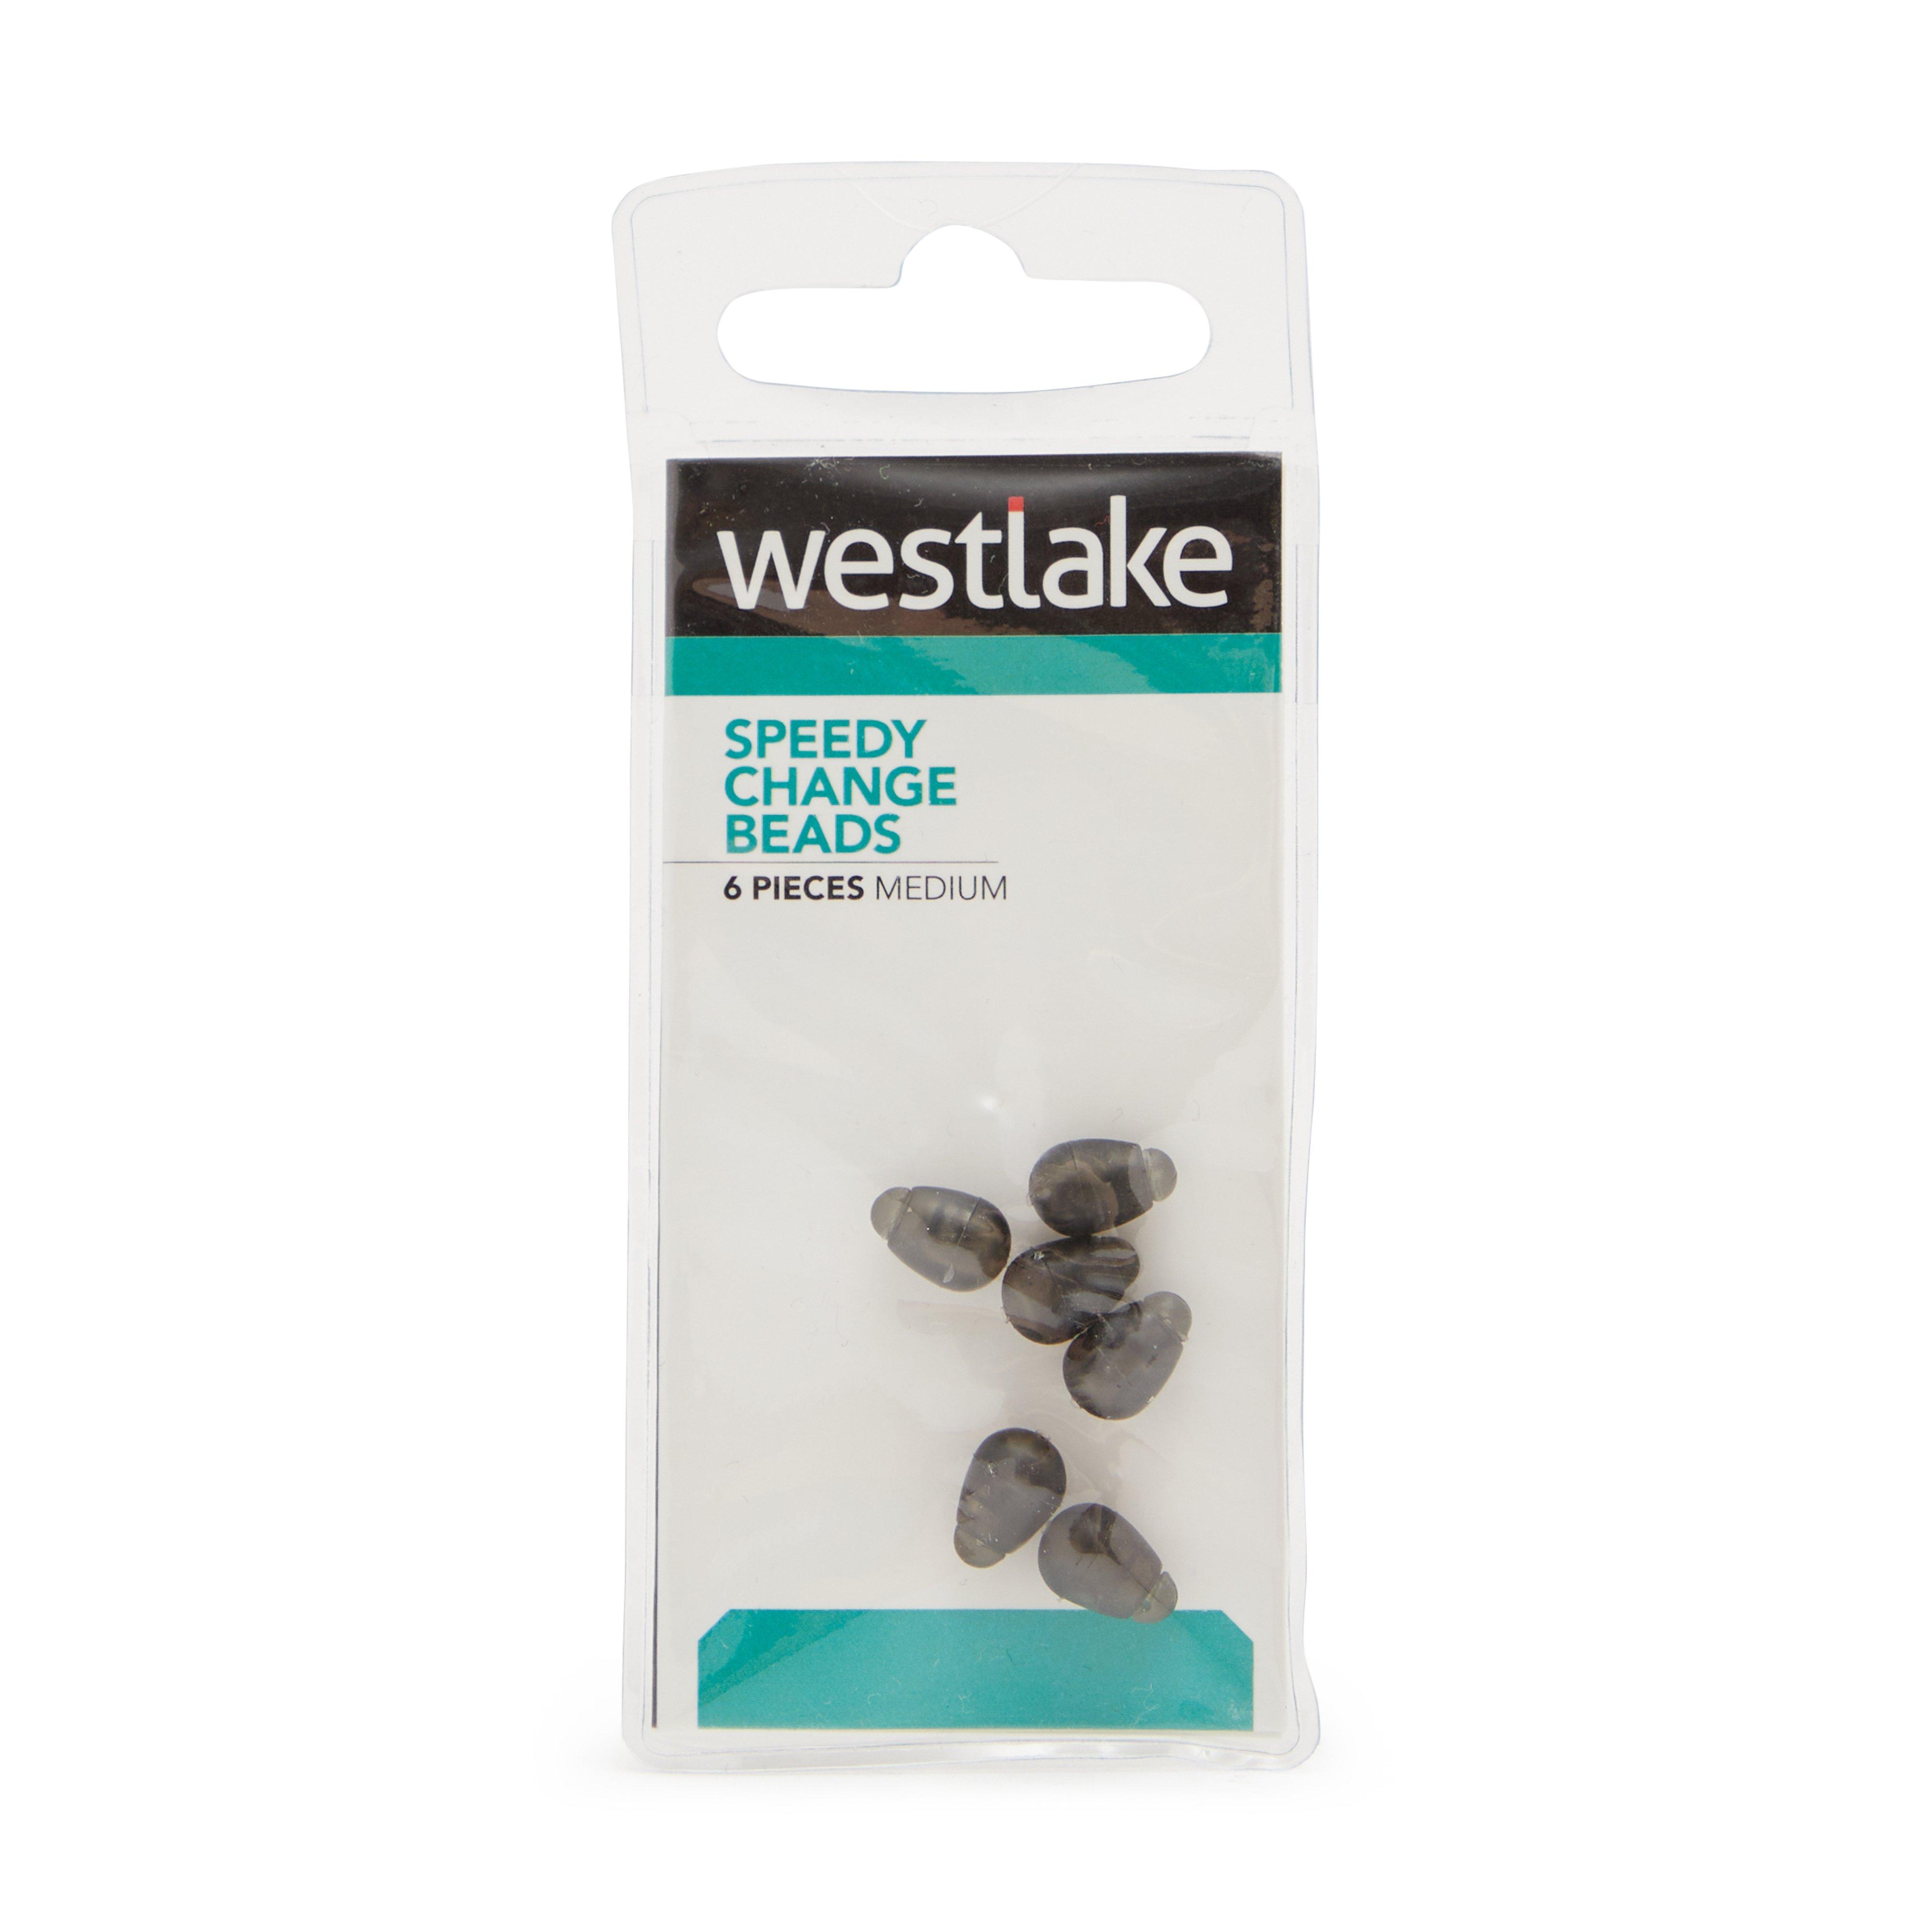 Westlake Speedy Change Bead 6 Pc Review